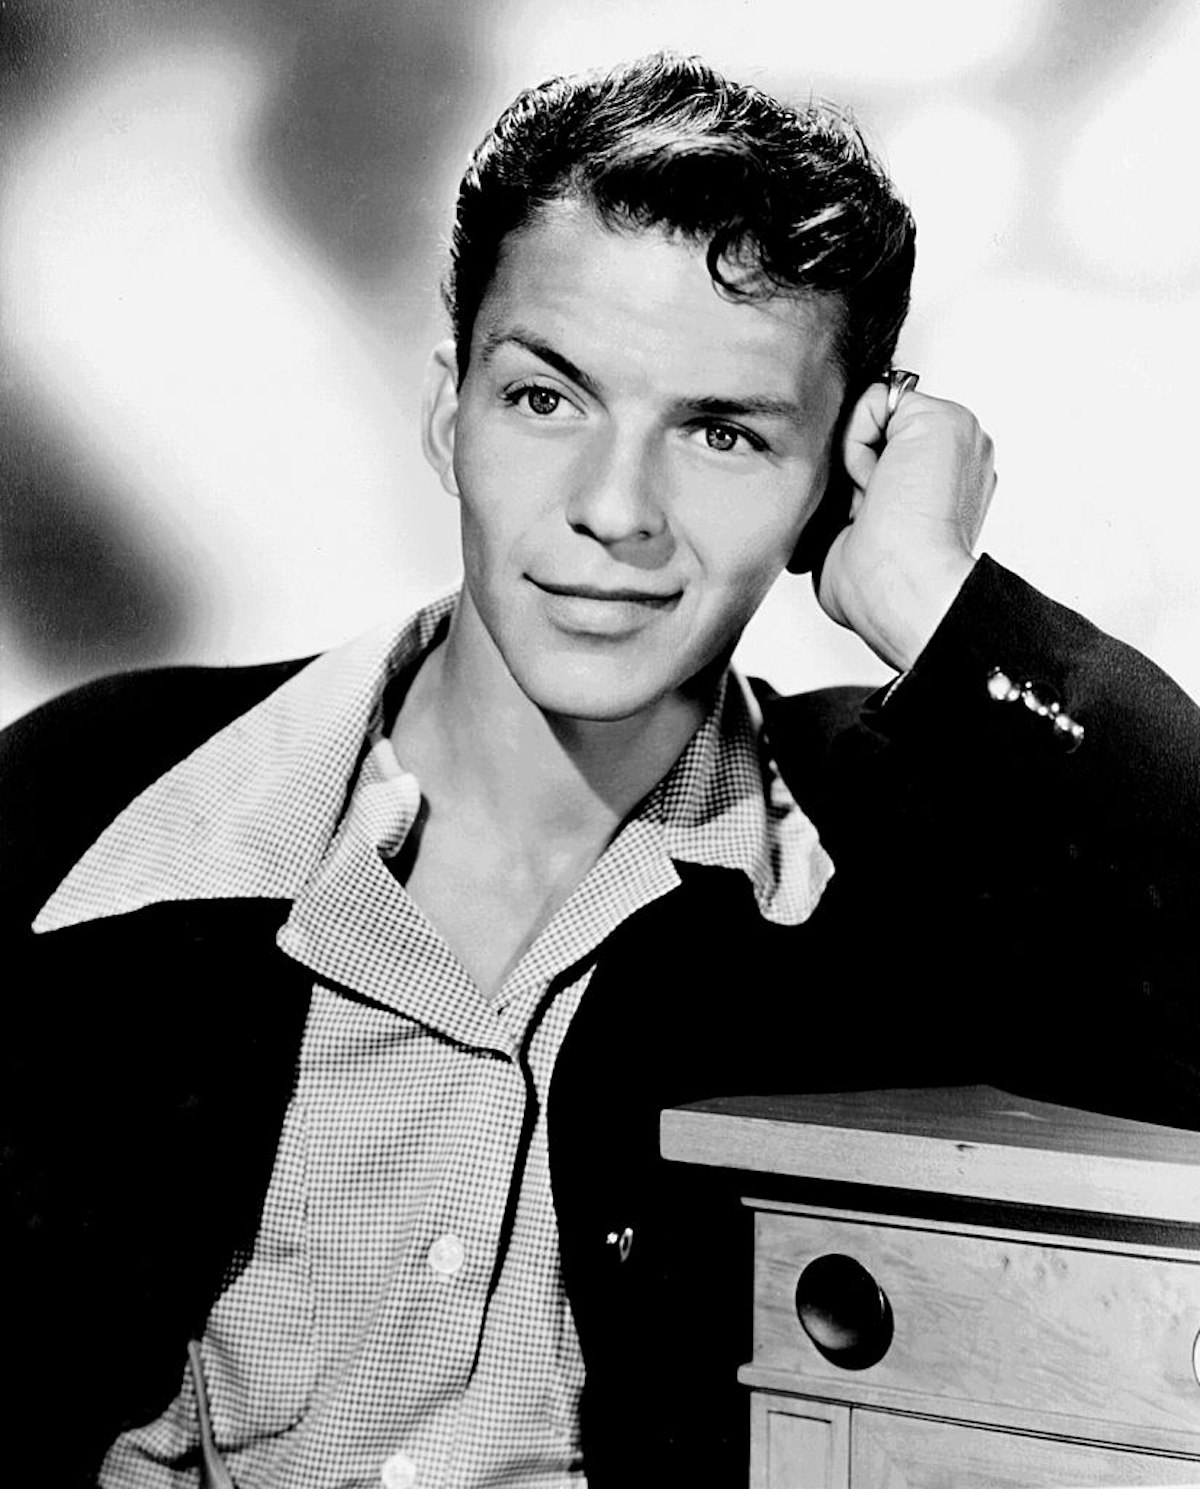 Young Photos of Frank Sinatra — Musician Jazz Actor Hollywood Glamor ...